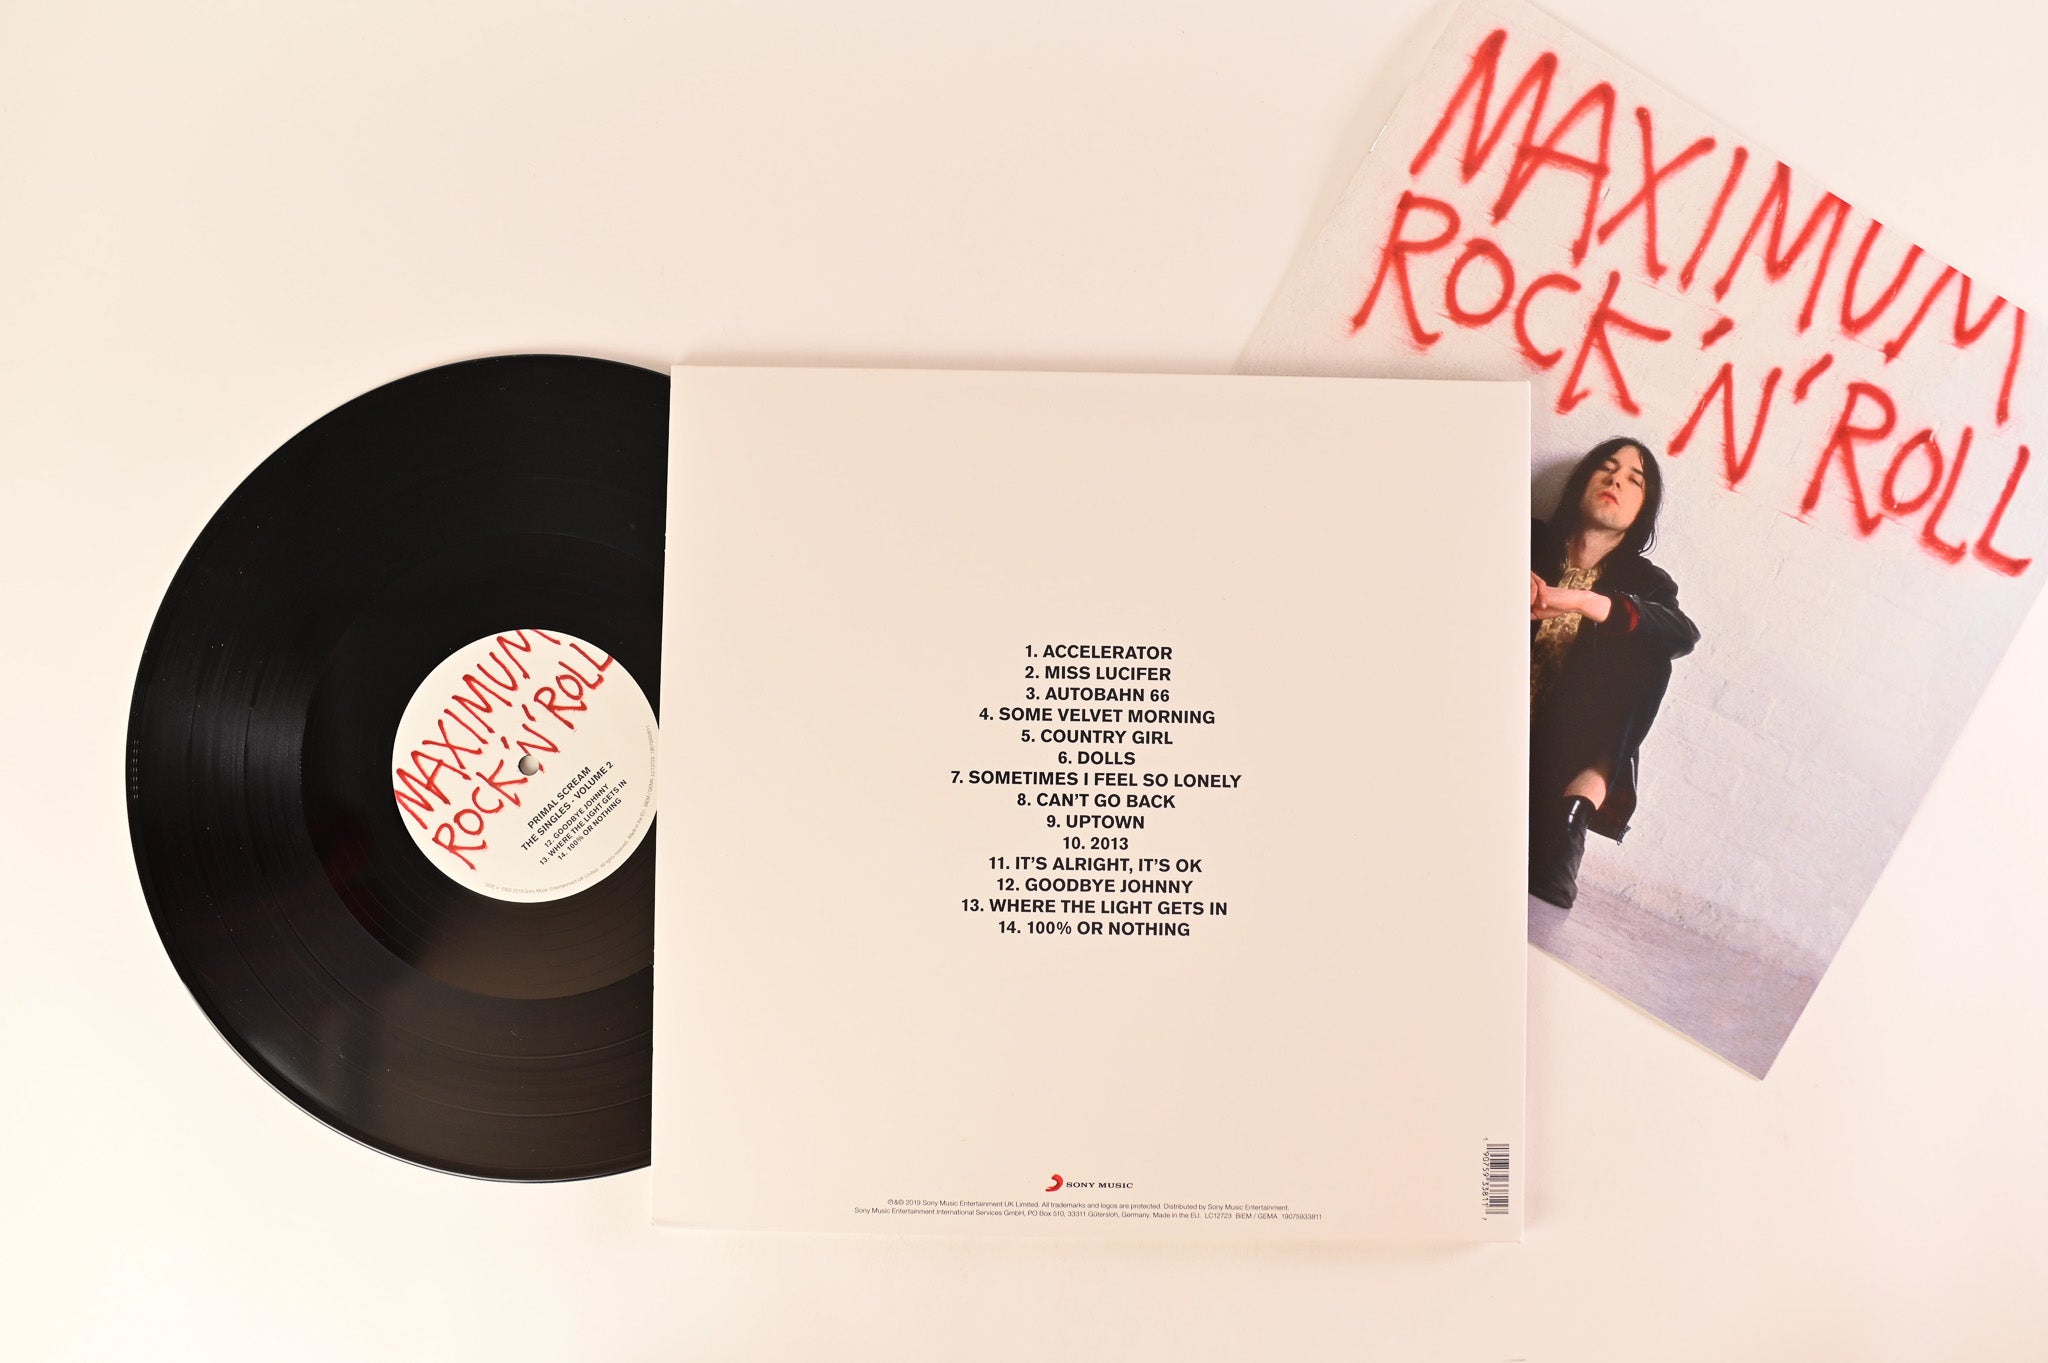 Primal Scream - Maximum Rock 'N' Roll - The Singles Volume 2 on Sony Music